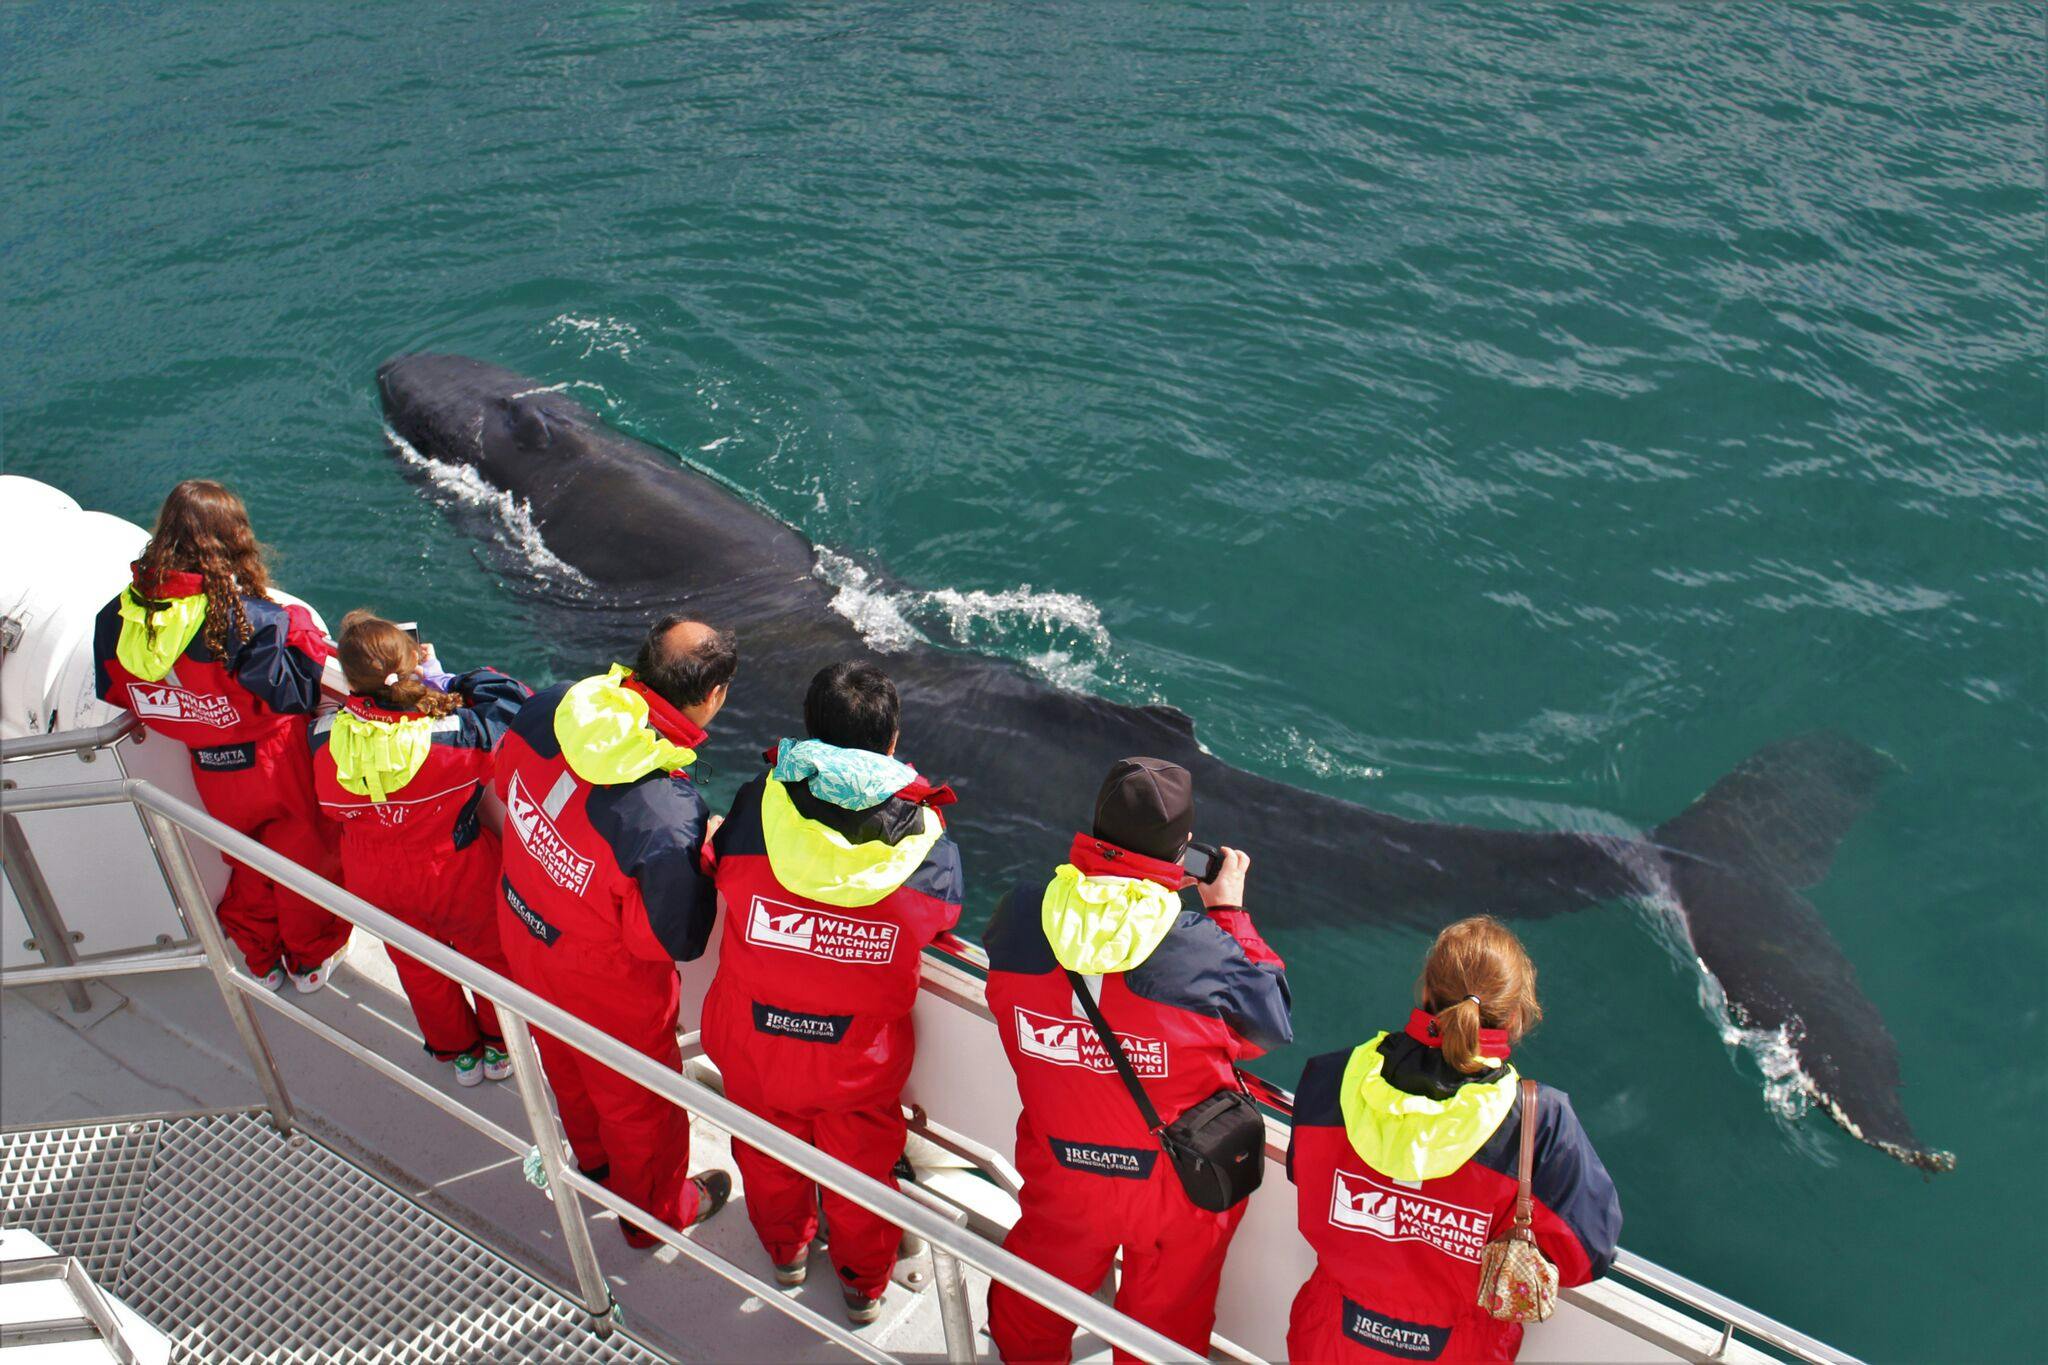 Akureyri Classic Whale Watching